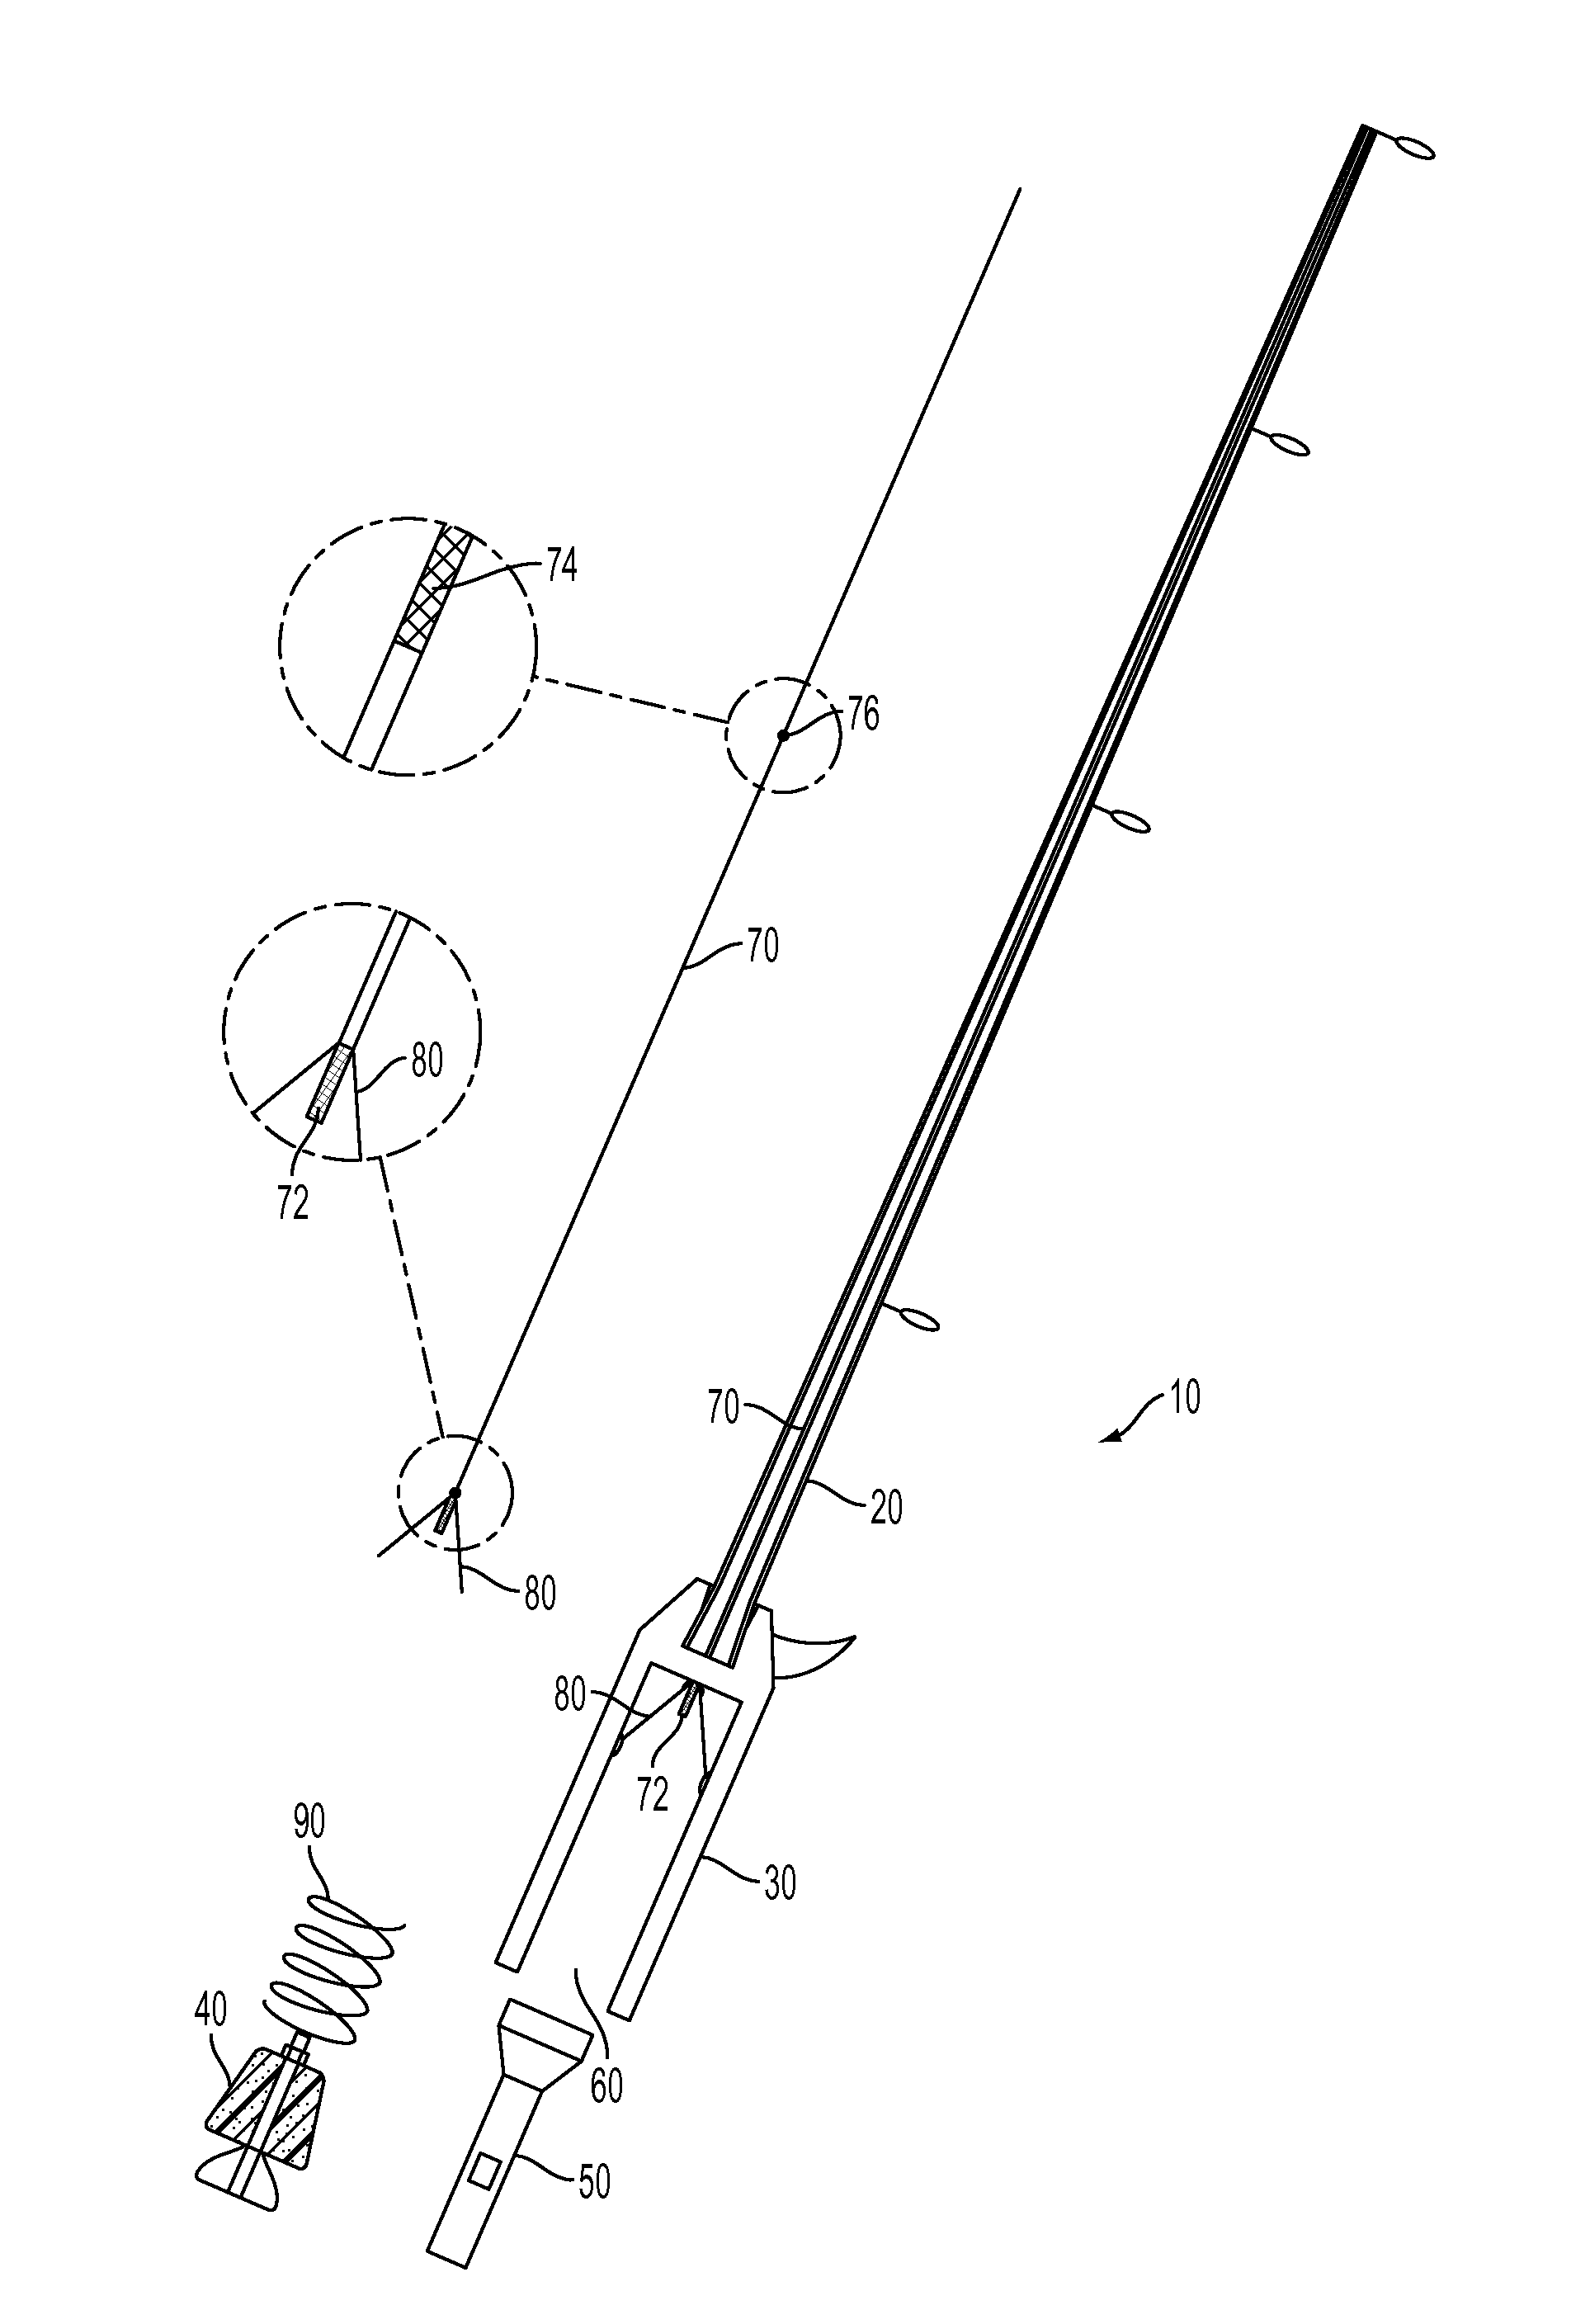 Fishing pole with replaceable illumination element